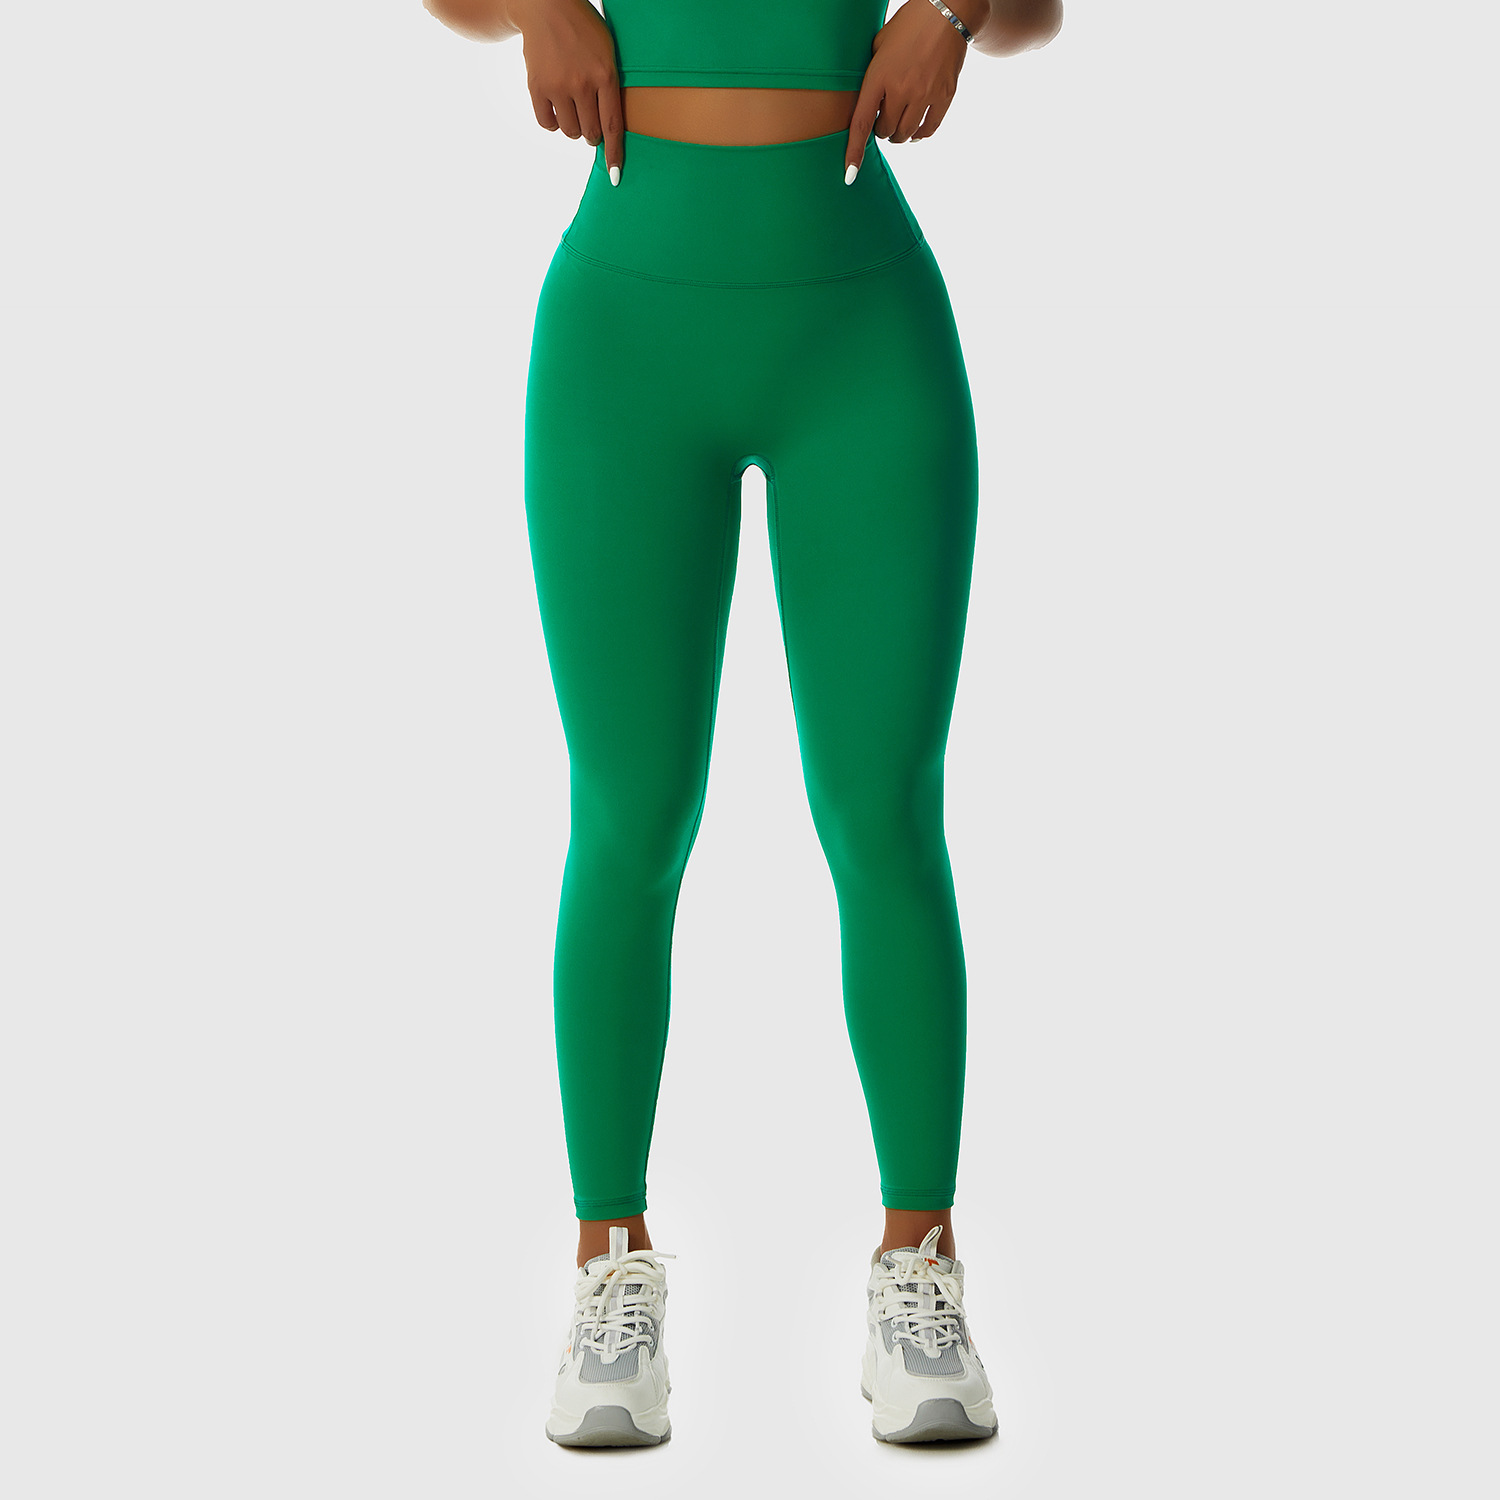 gym leggings supplier